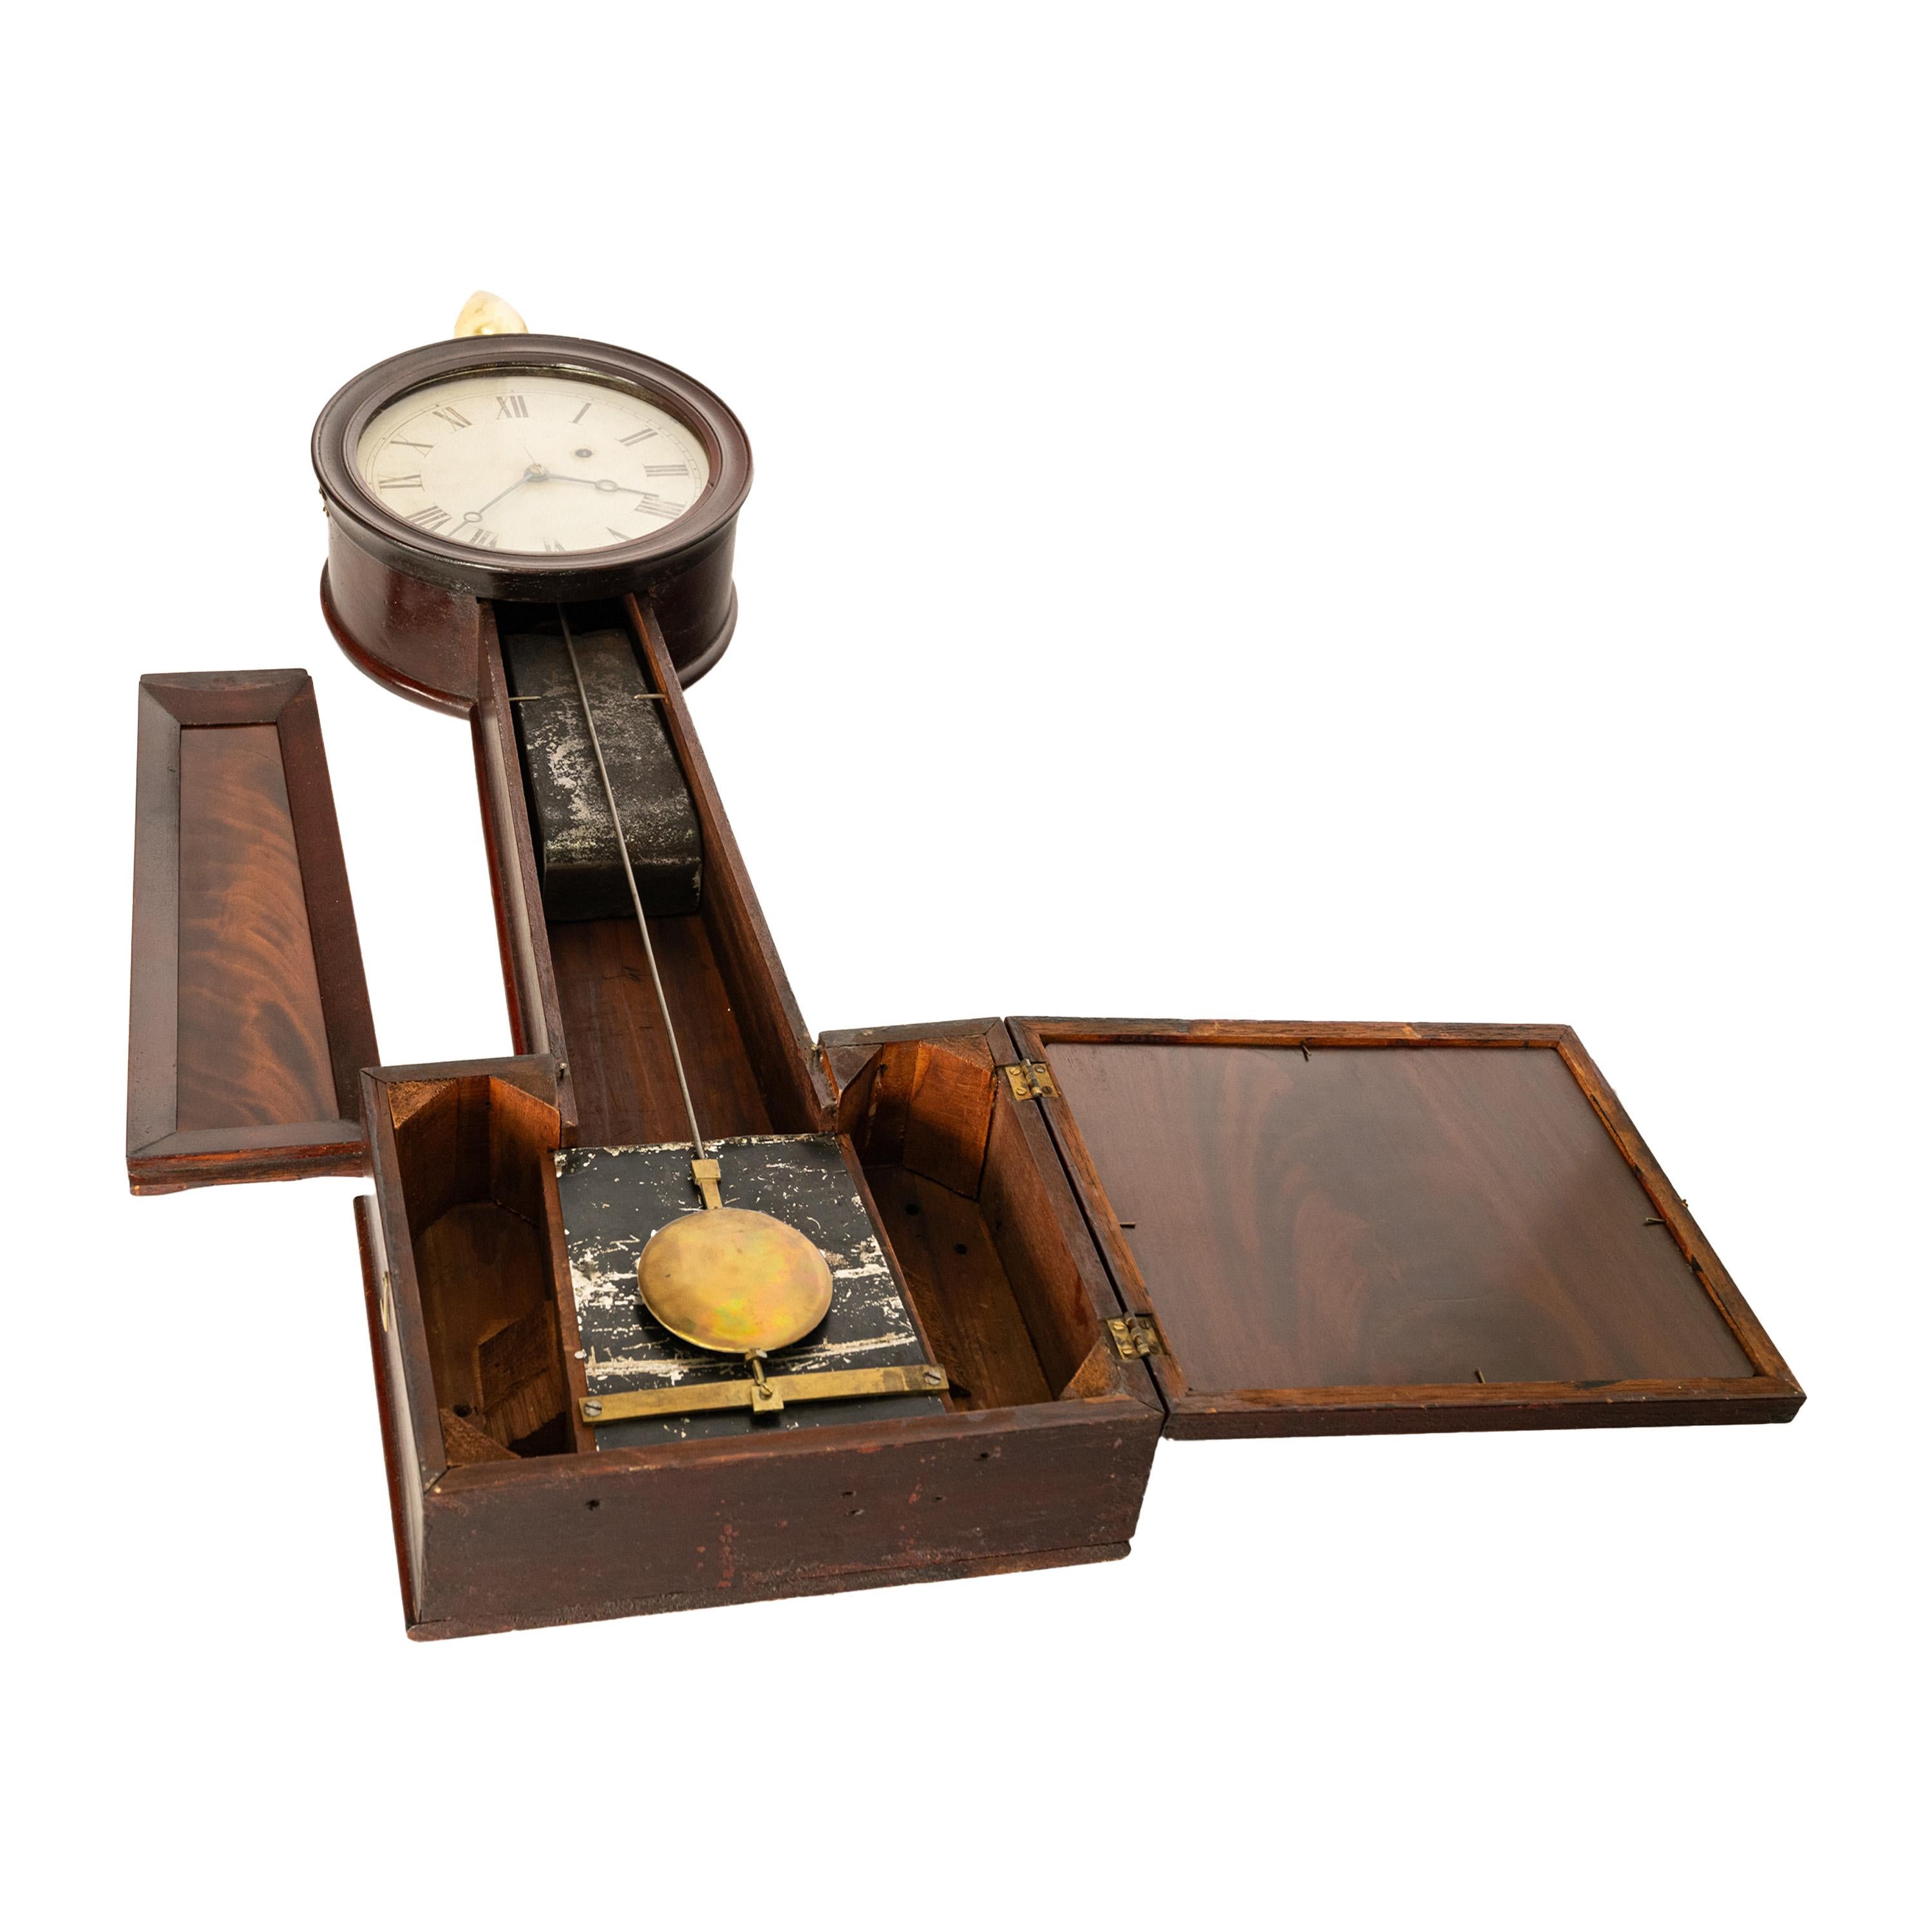 Antique American Simon Willard & Son 8 Day Banjo Clock Patent Timepiece 1825 4